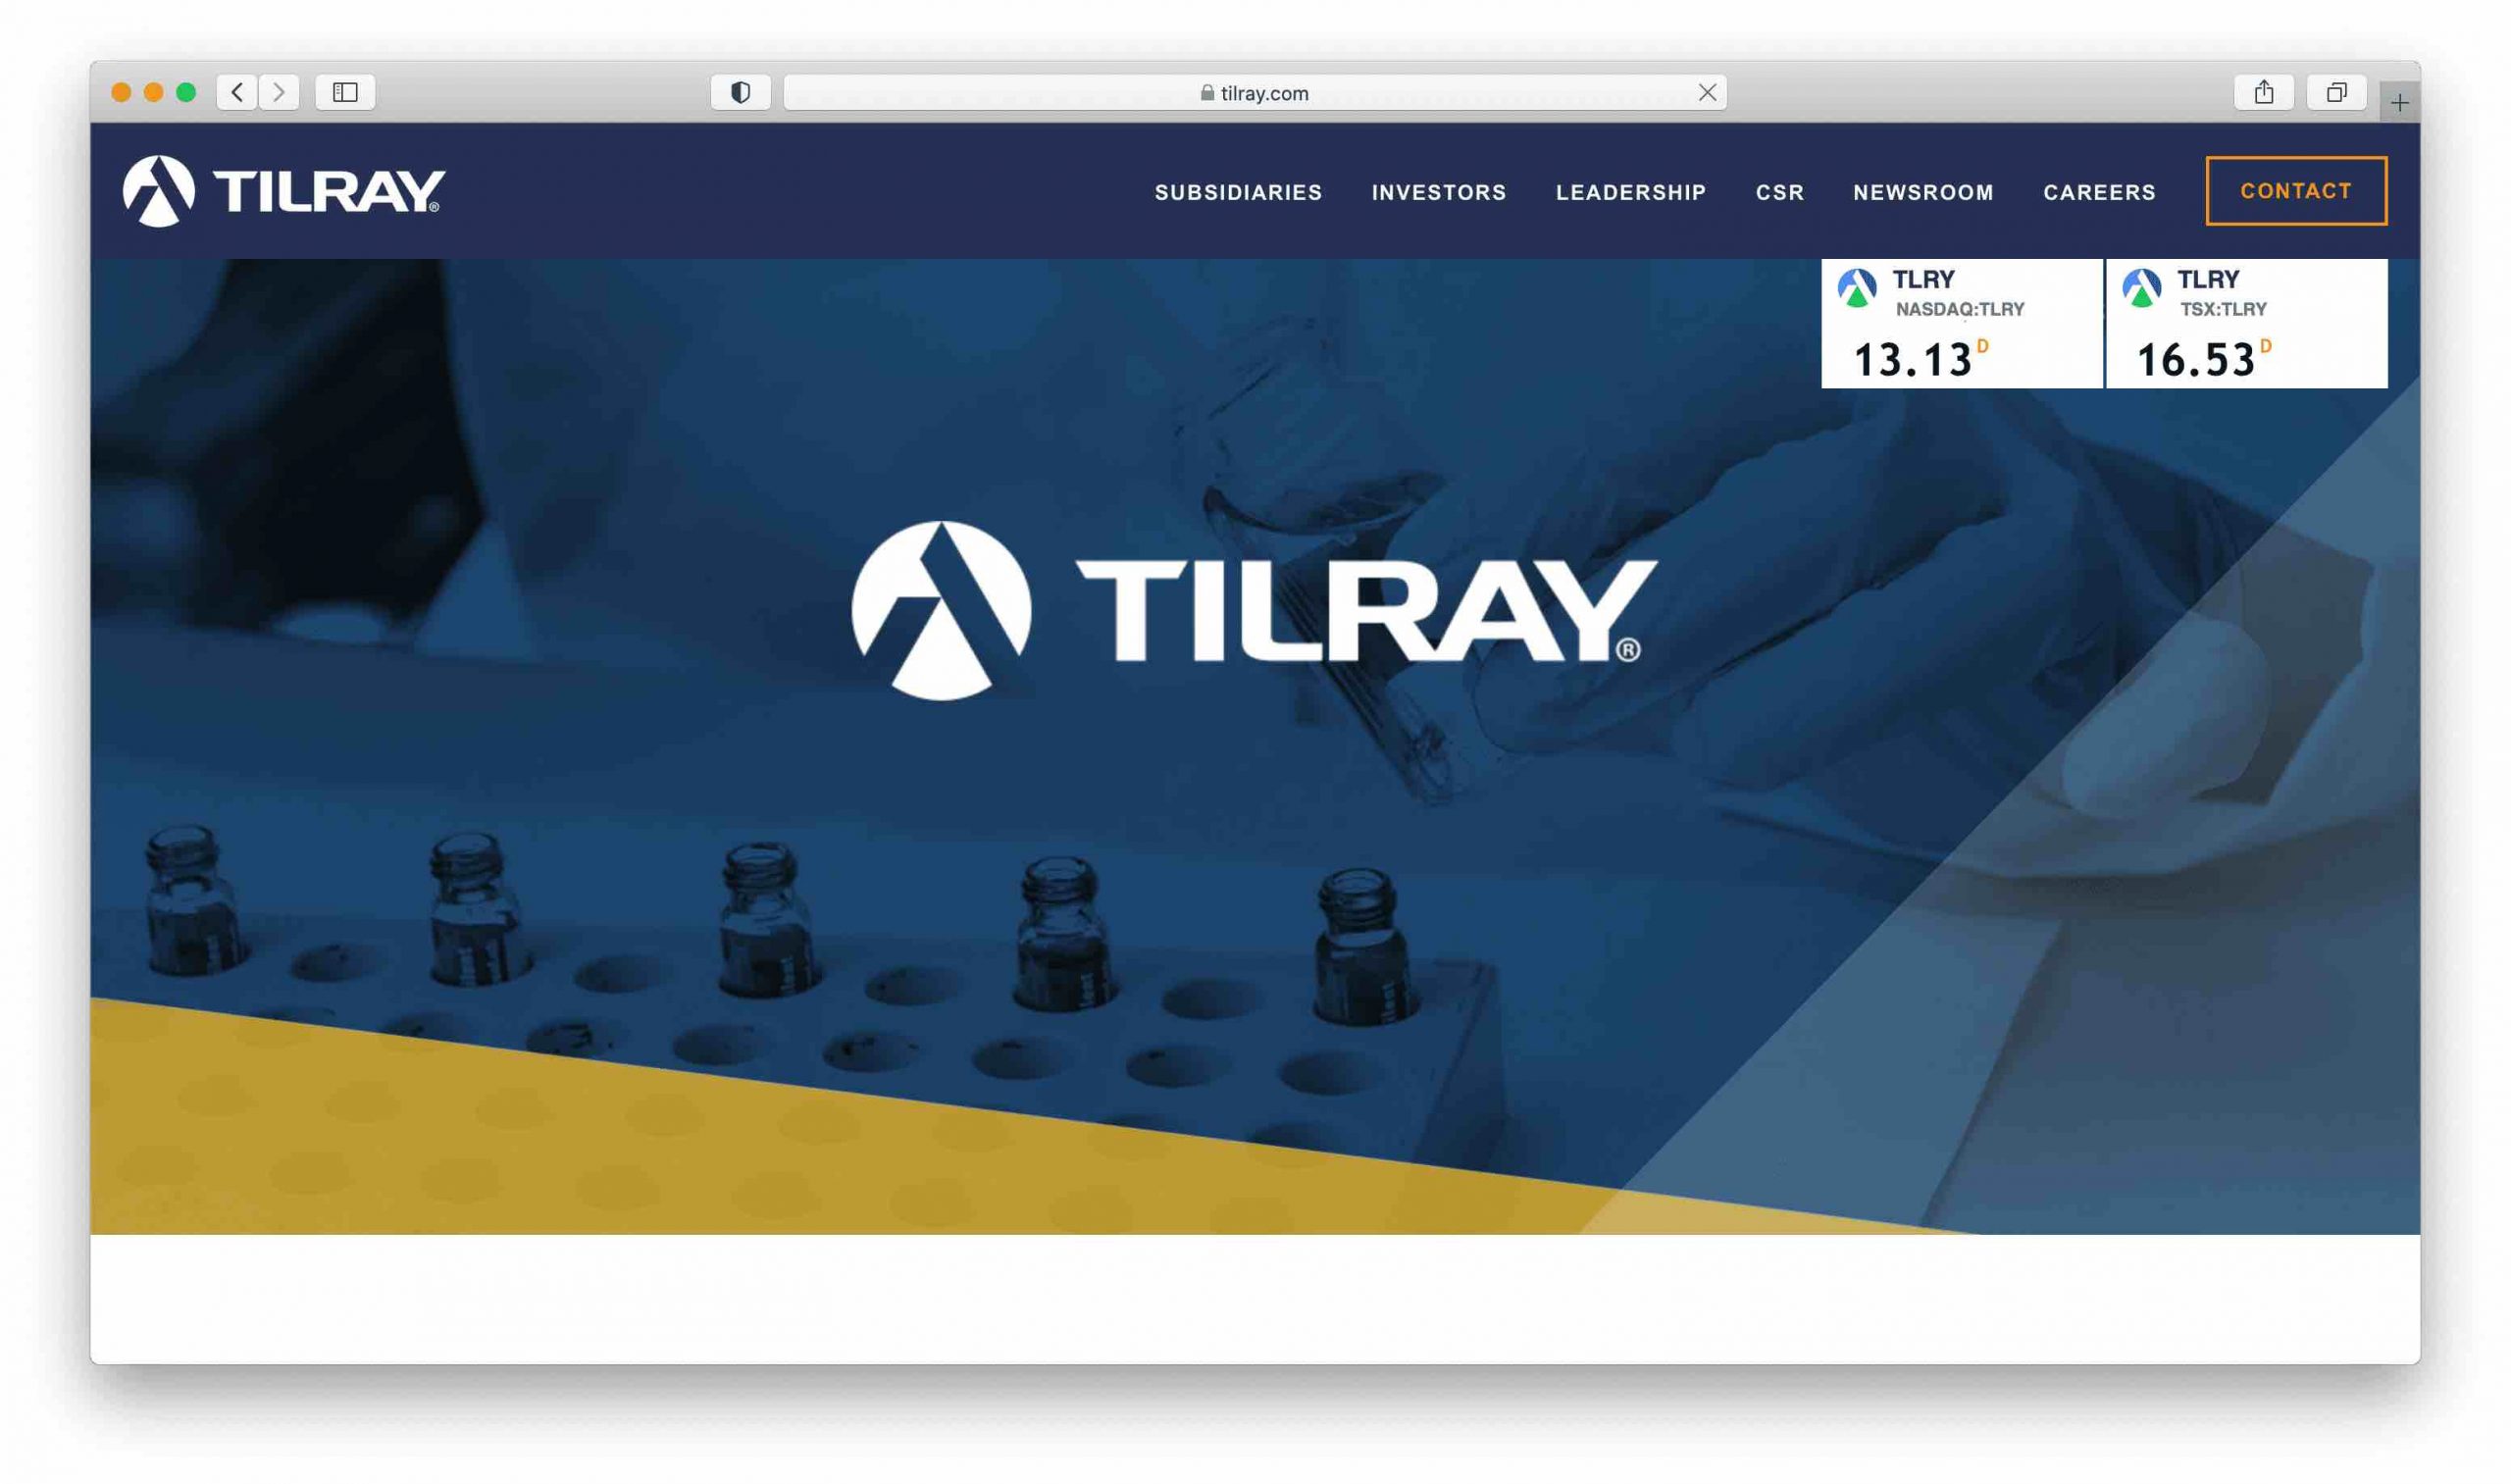 Tilray Brand Review